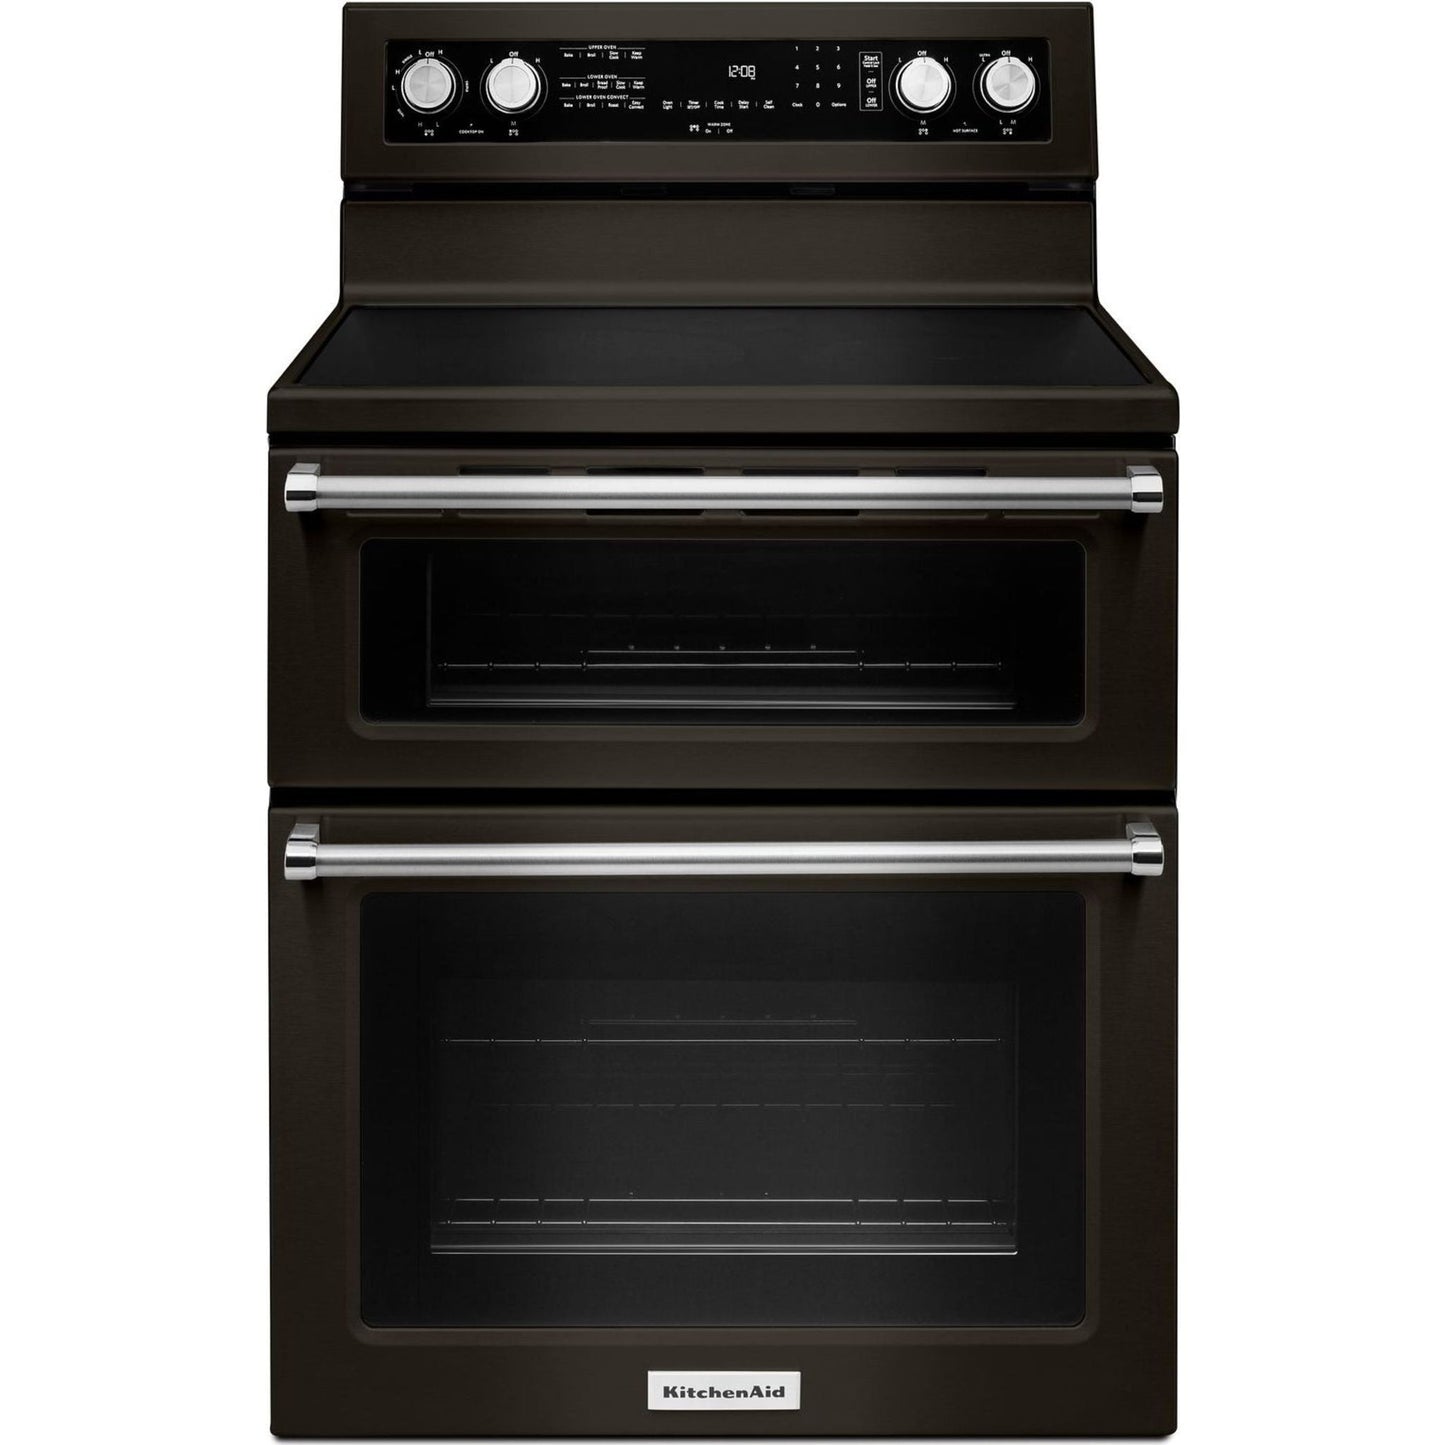 KitchenAid Double Oven Range (YKFED500EBS) - Black Stainless Steel